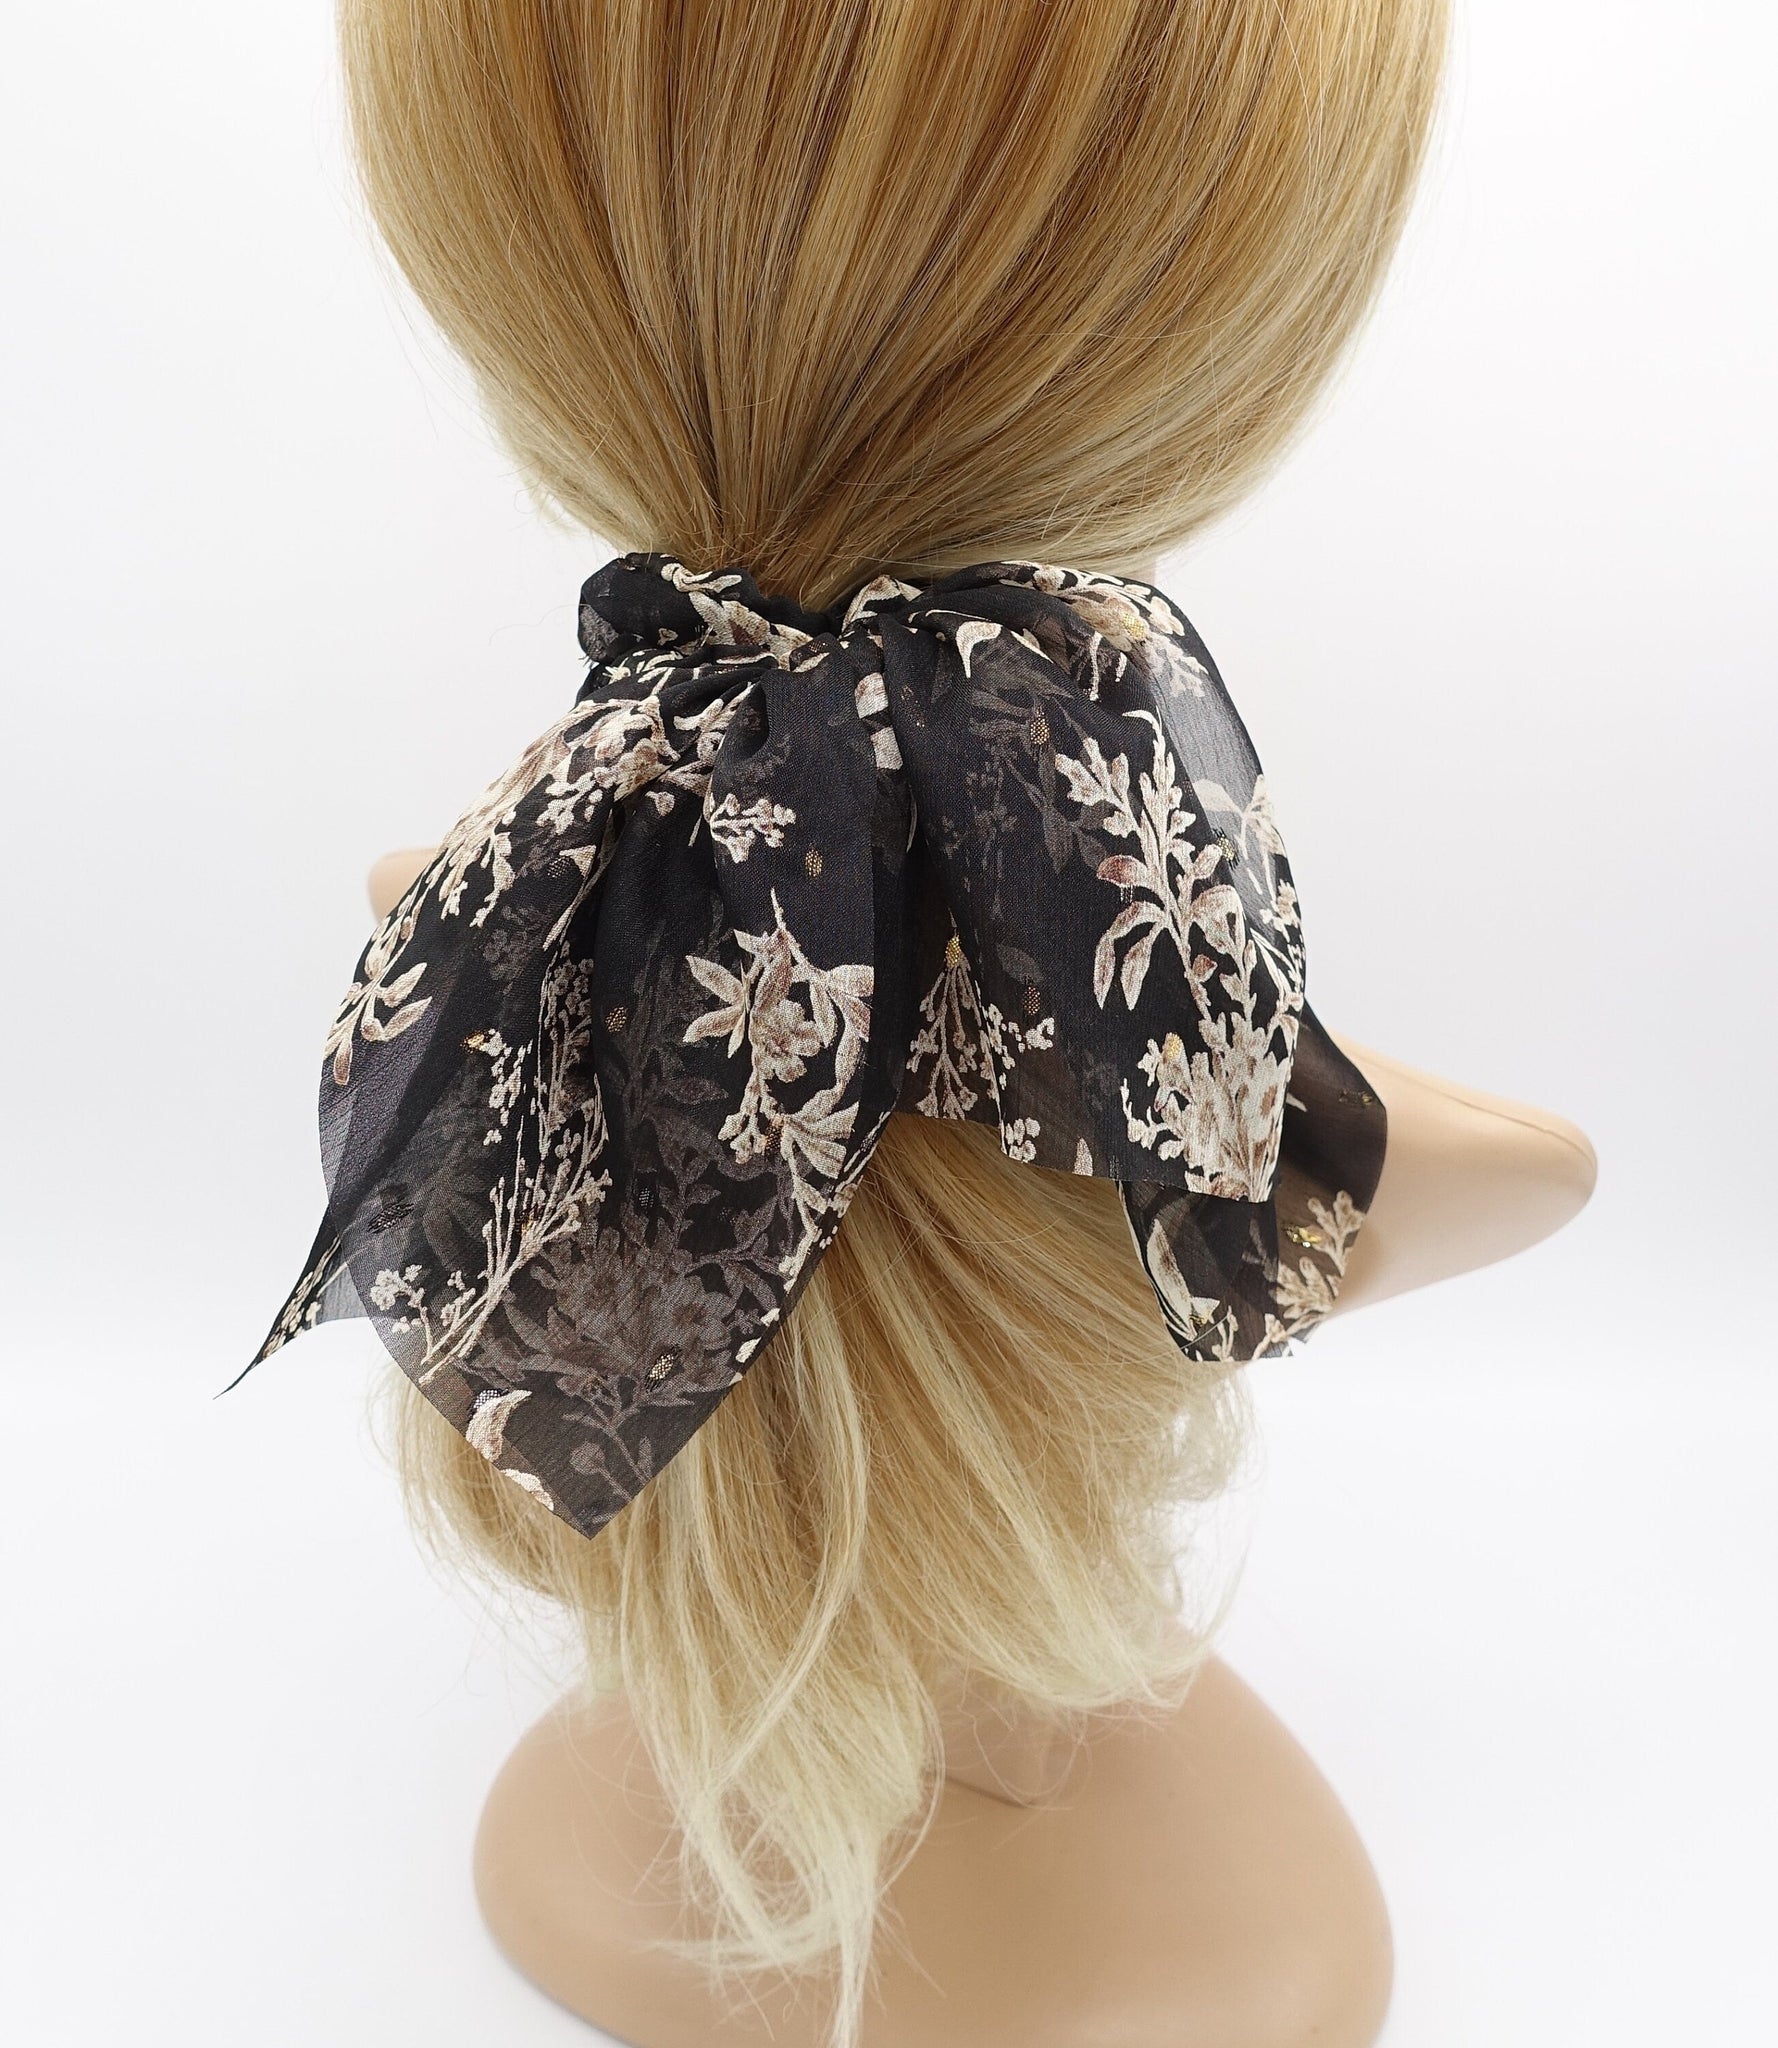 veryshine.com Scrunchies Black floral bow scrunchies, chiffon scrunchies, golden glittering hair ties for women